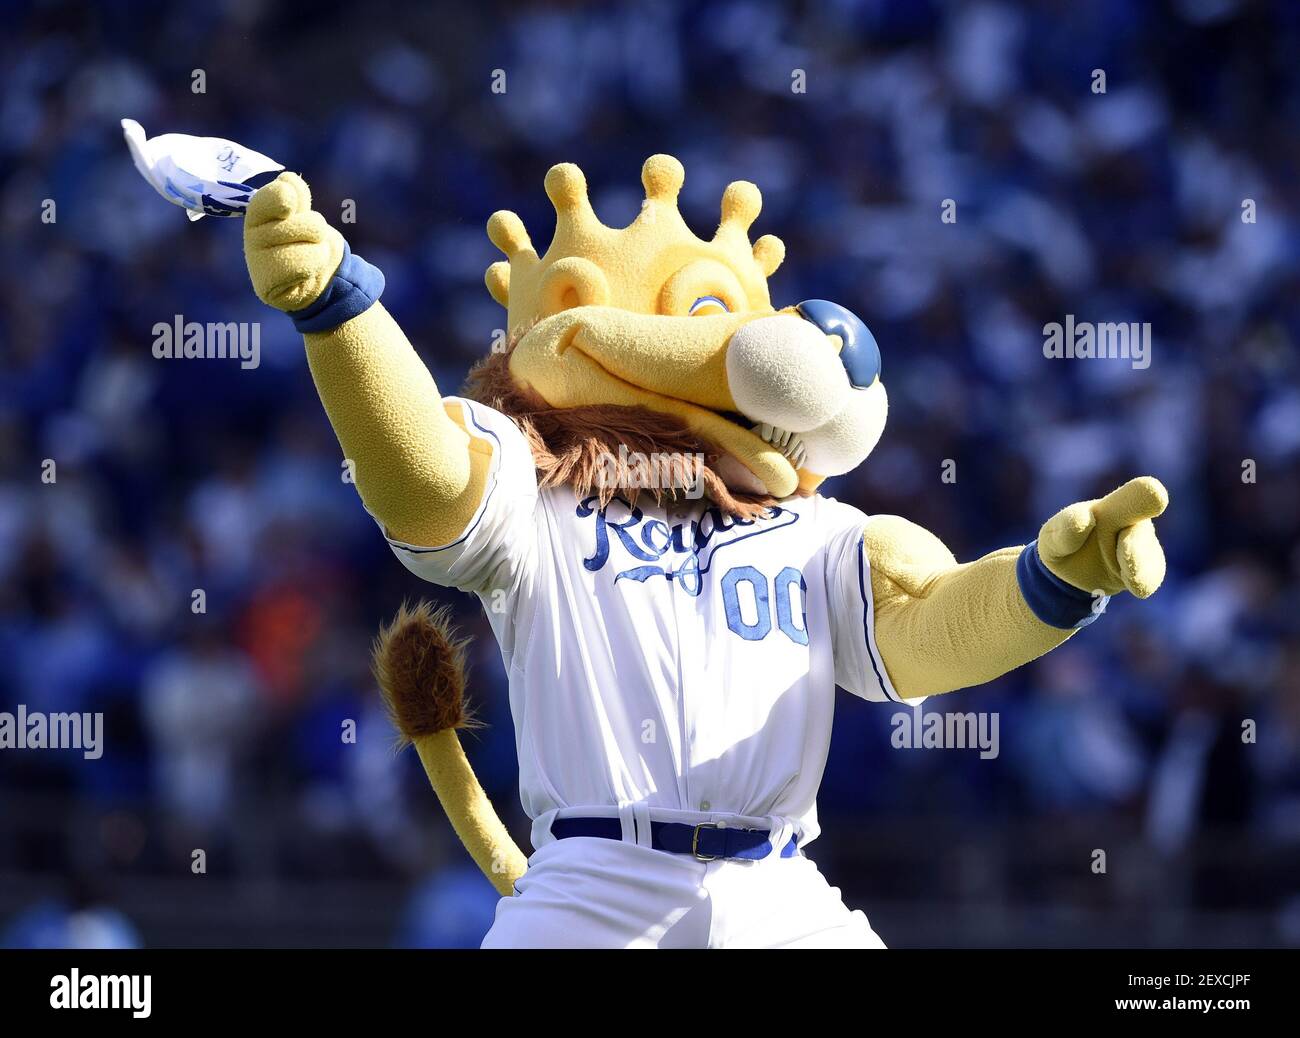 Join KC Royals mascot Sluggerrr for run onto baseball field